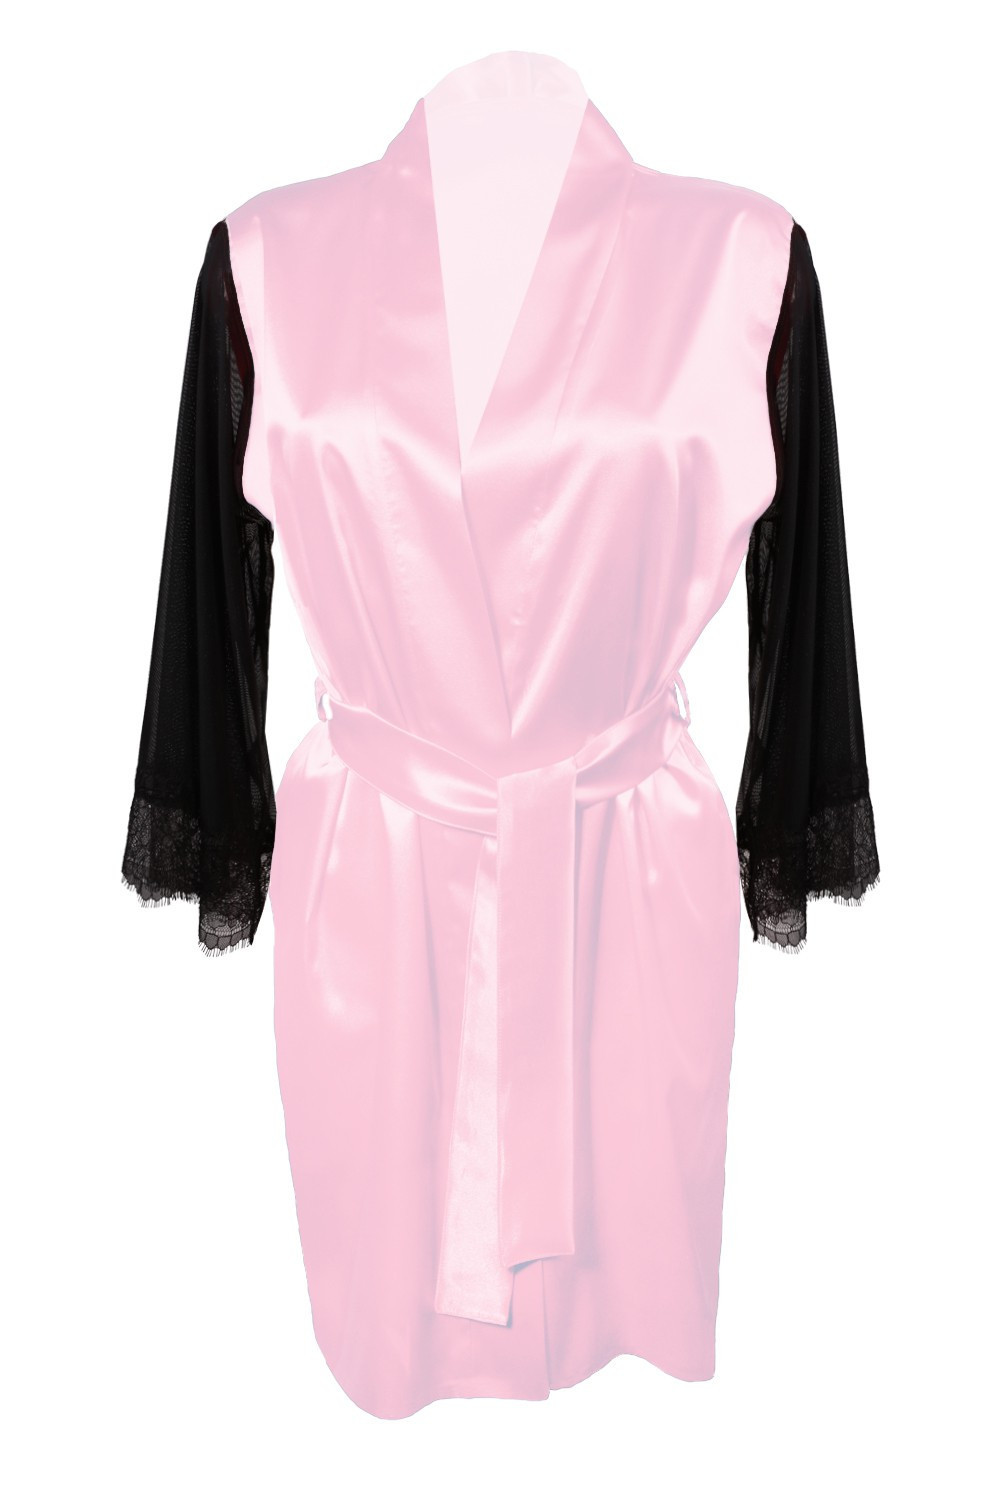 Housecoat model 18227289 Pink - DKaren Velikost: 2XL, Barva: růžová